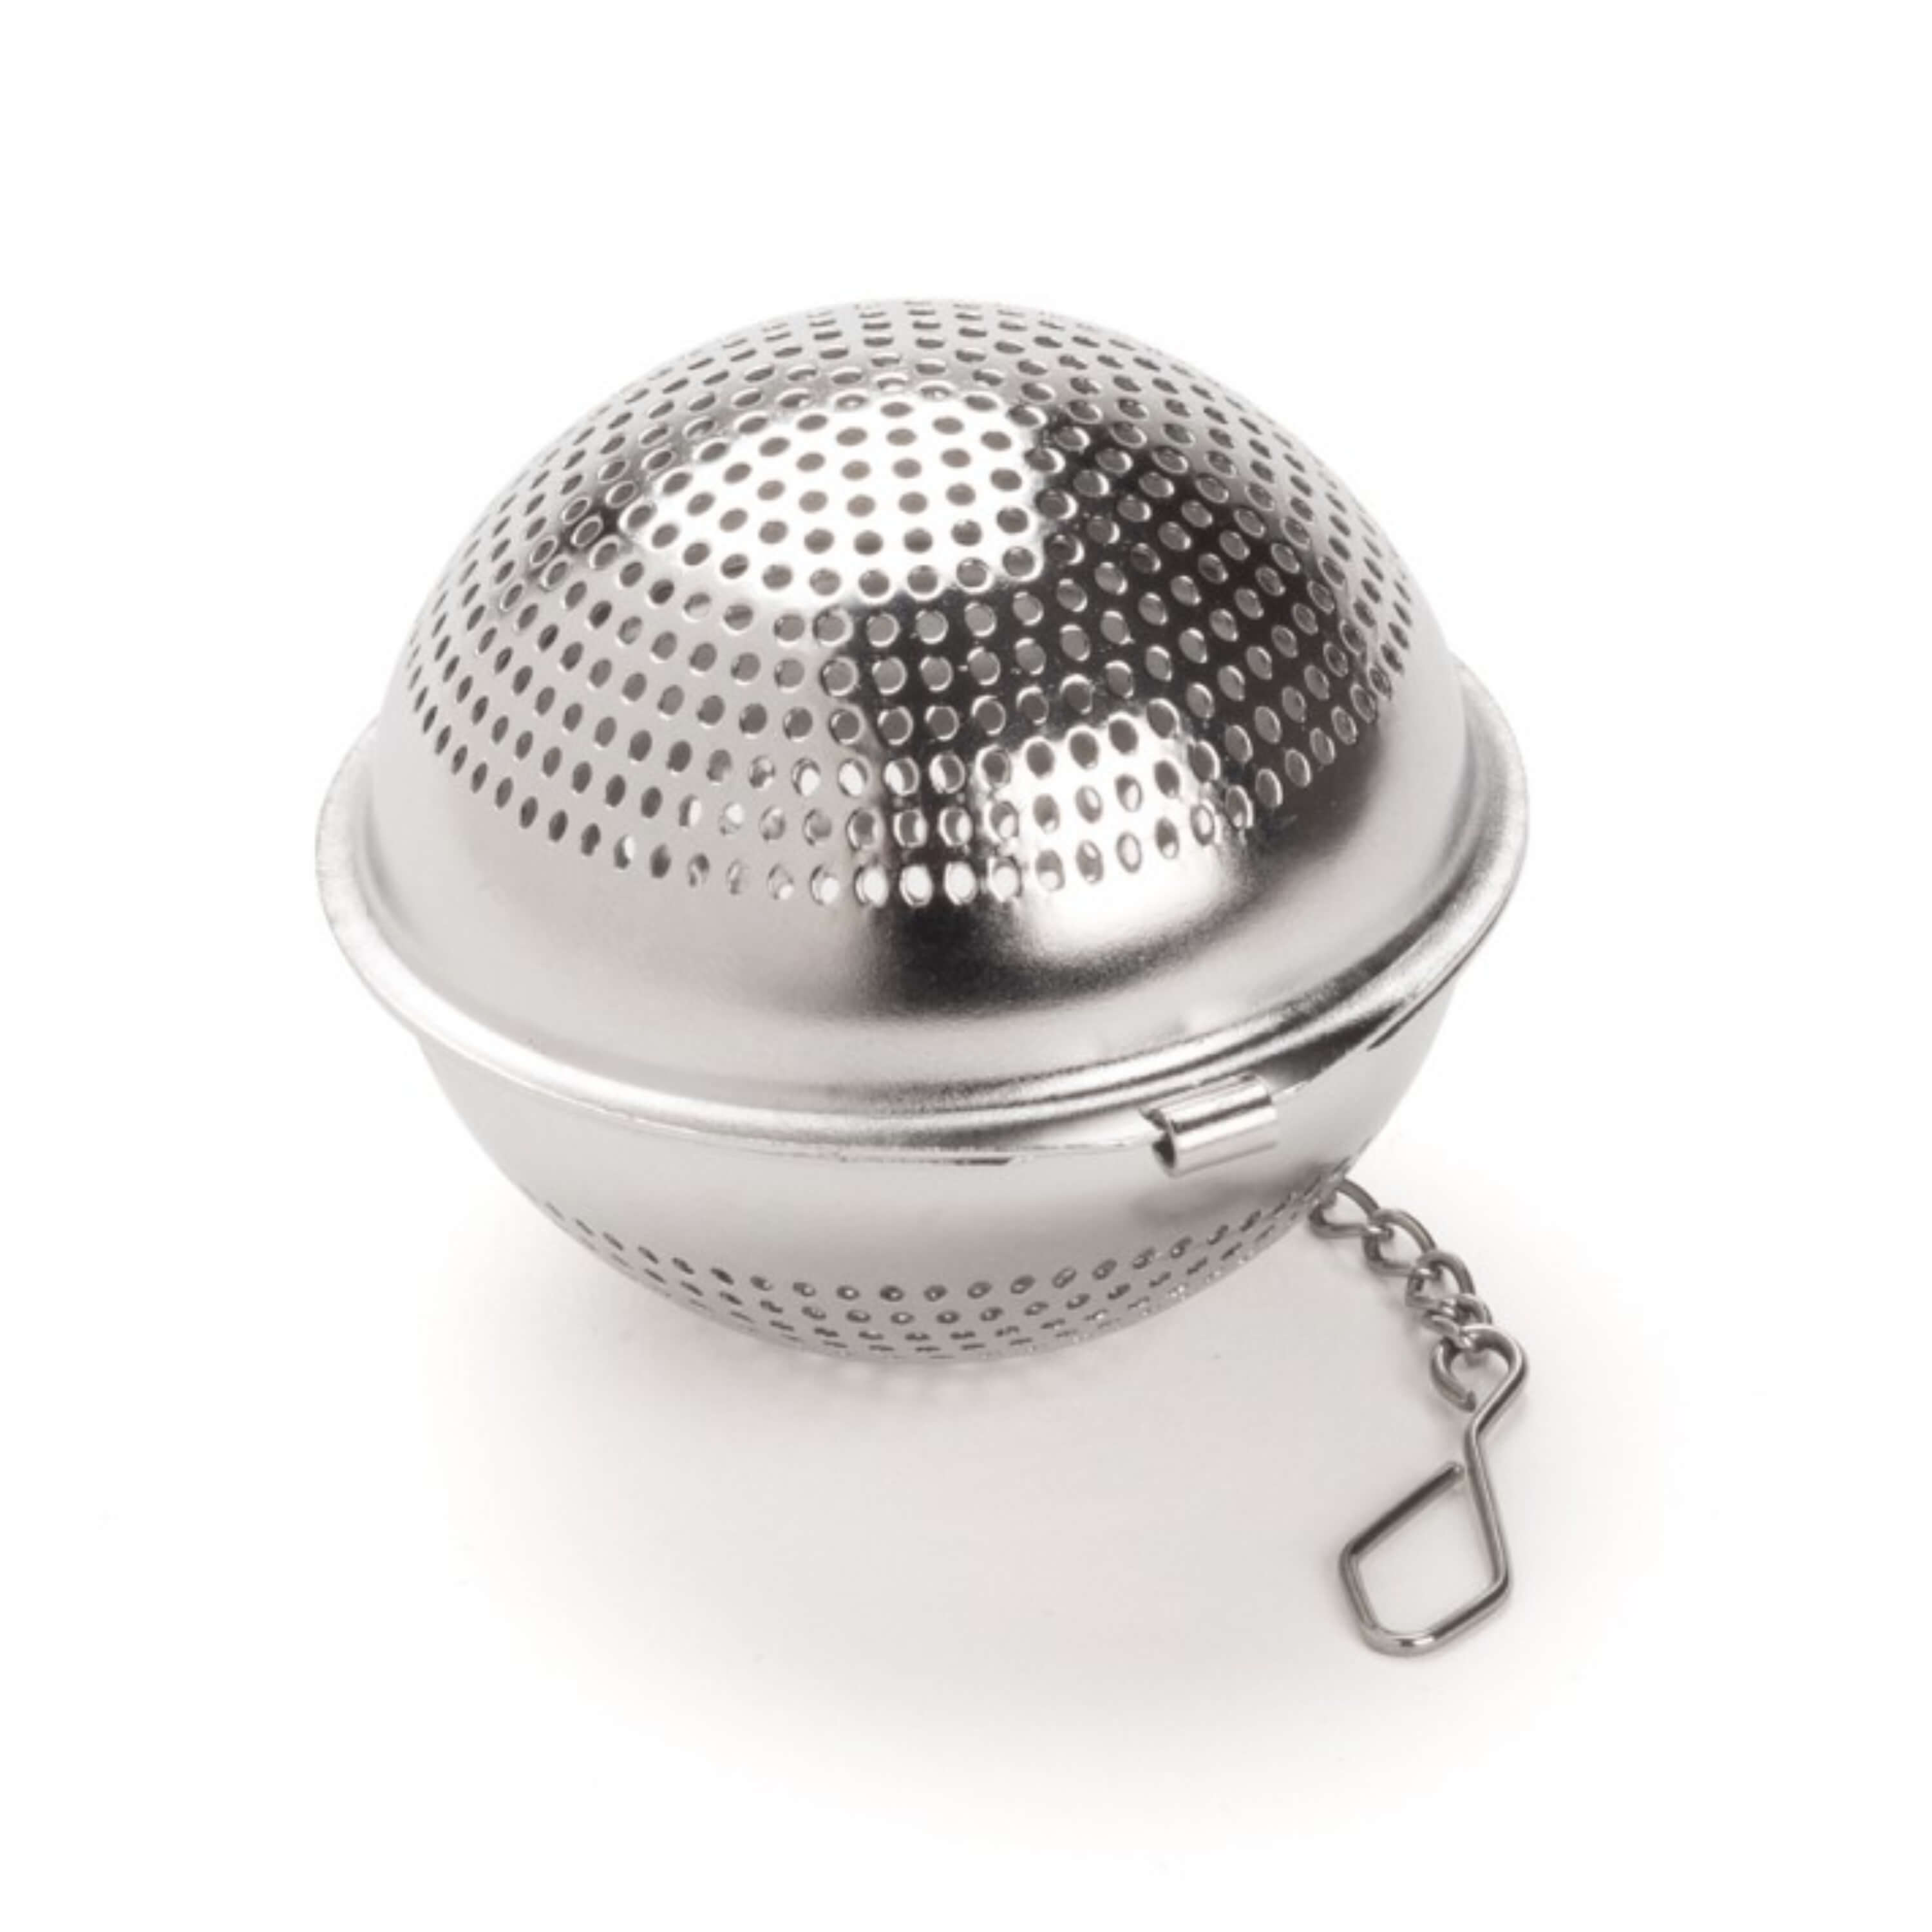 Dammann Frères Perforated Teaball with Chain , Tea Preparation, 18-21-9973